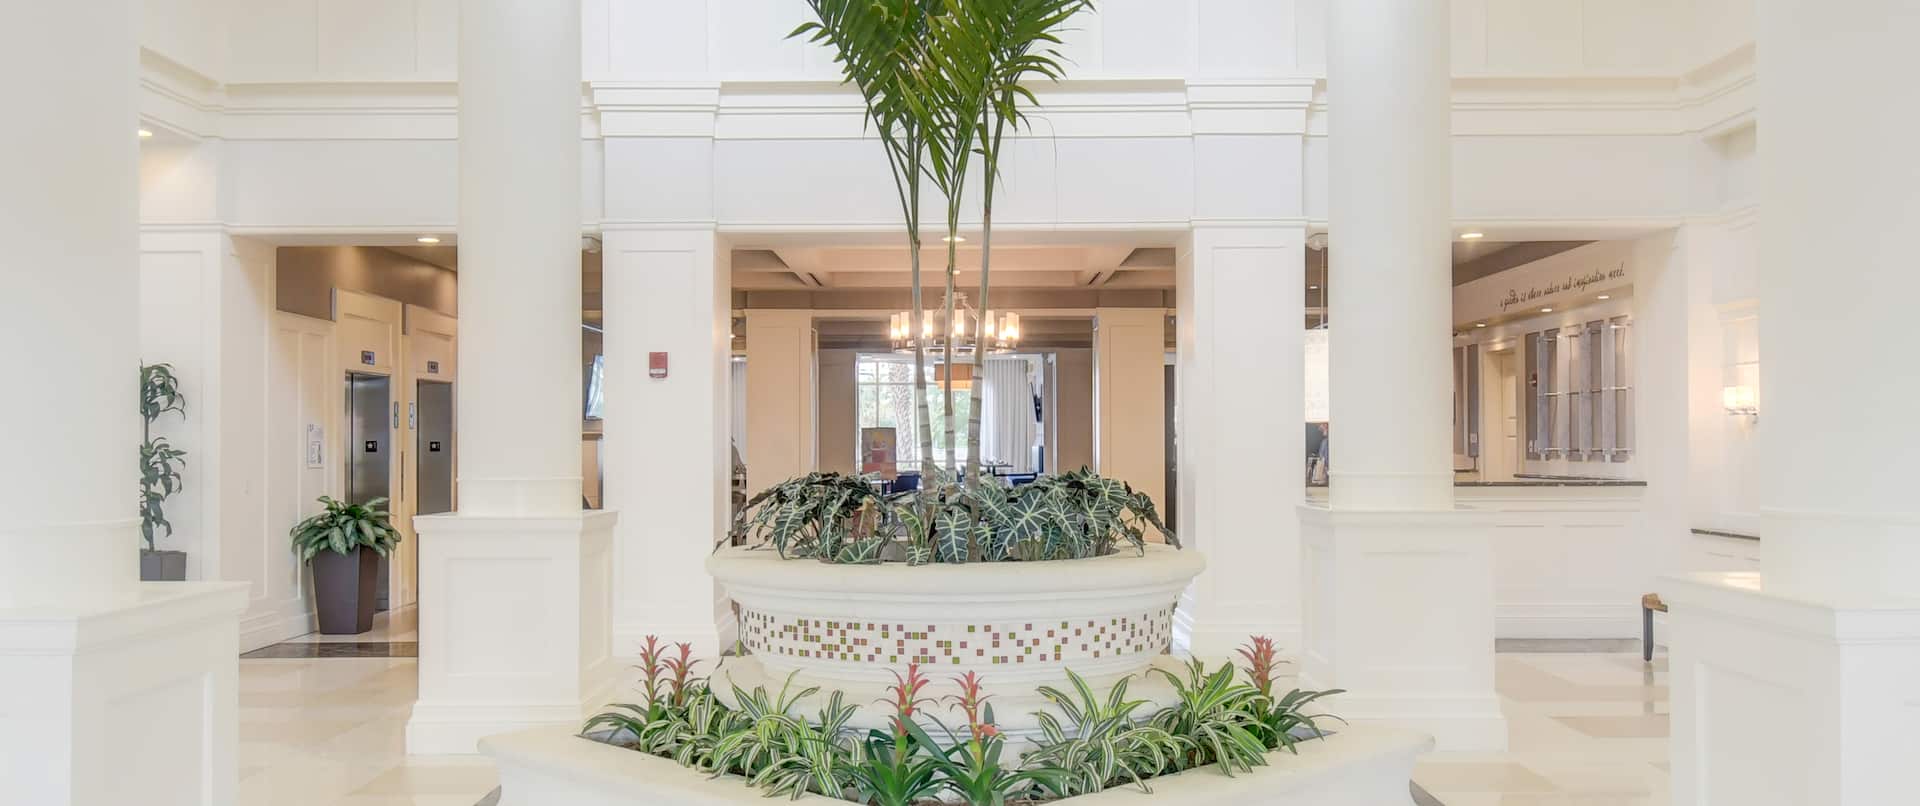 hotel lobby entrance, palm tree, plants